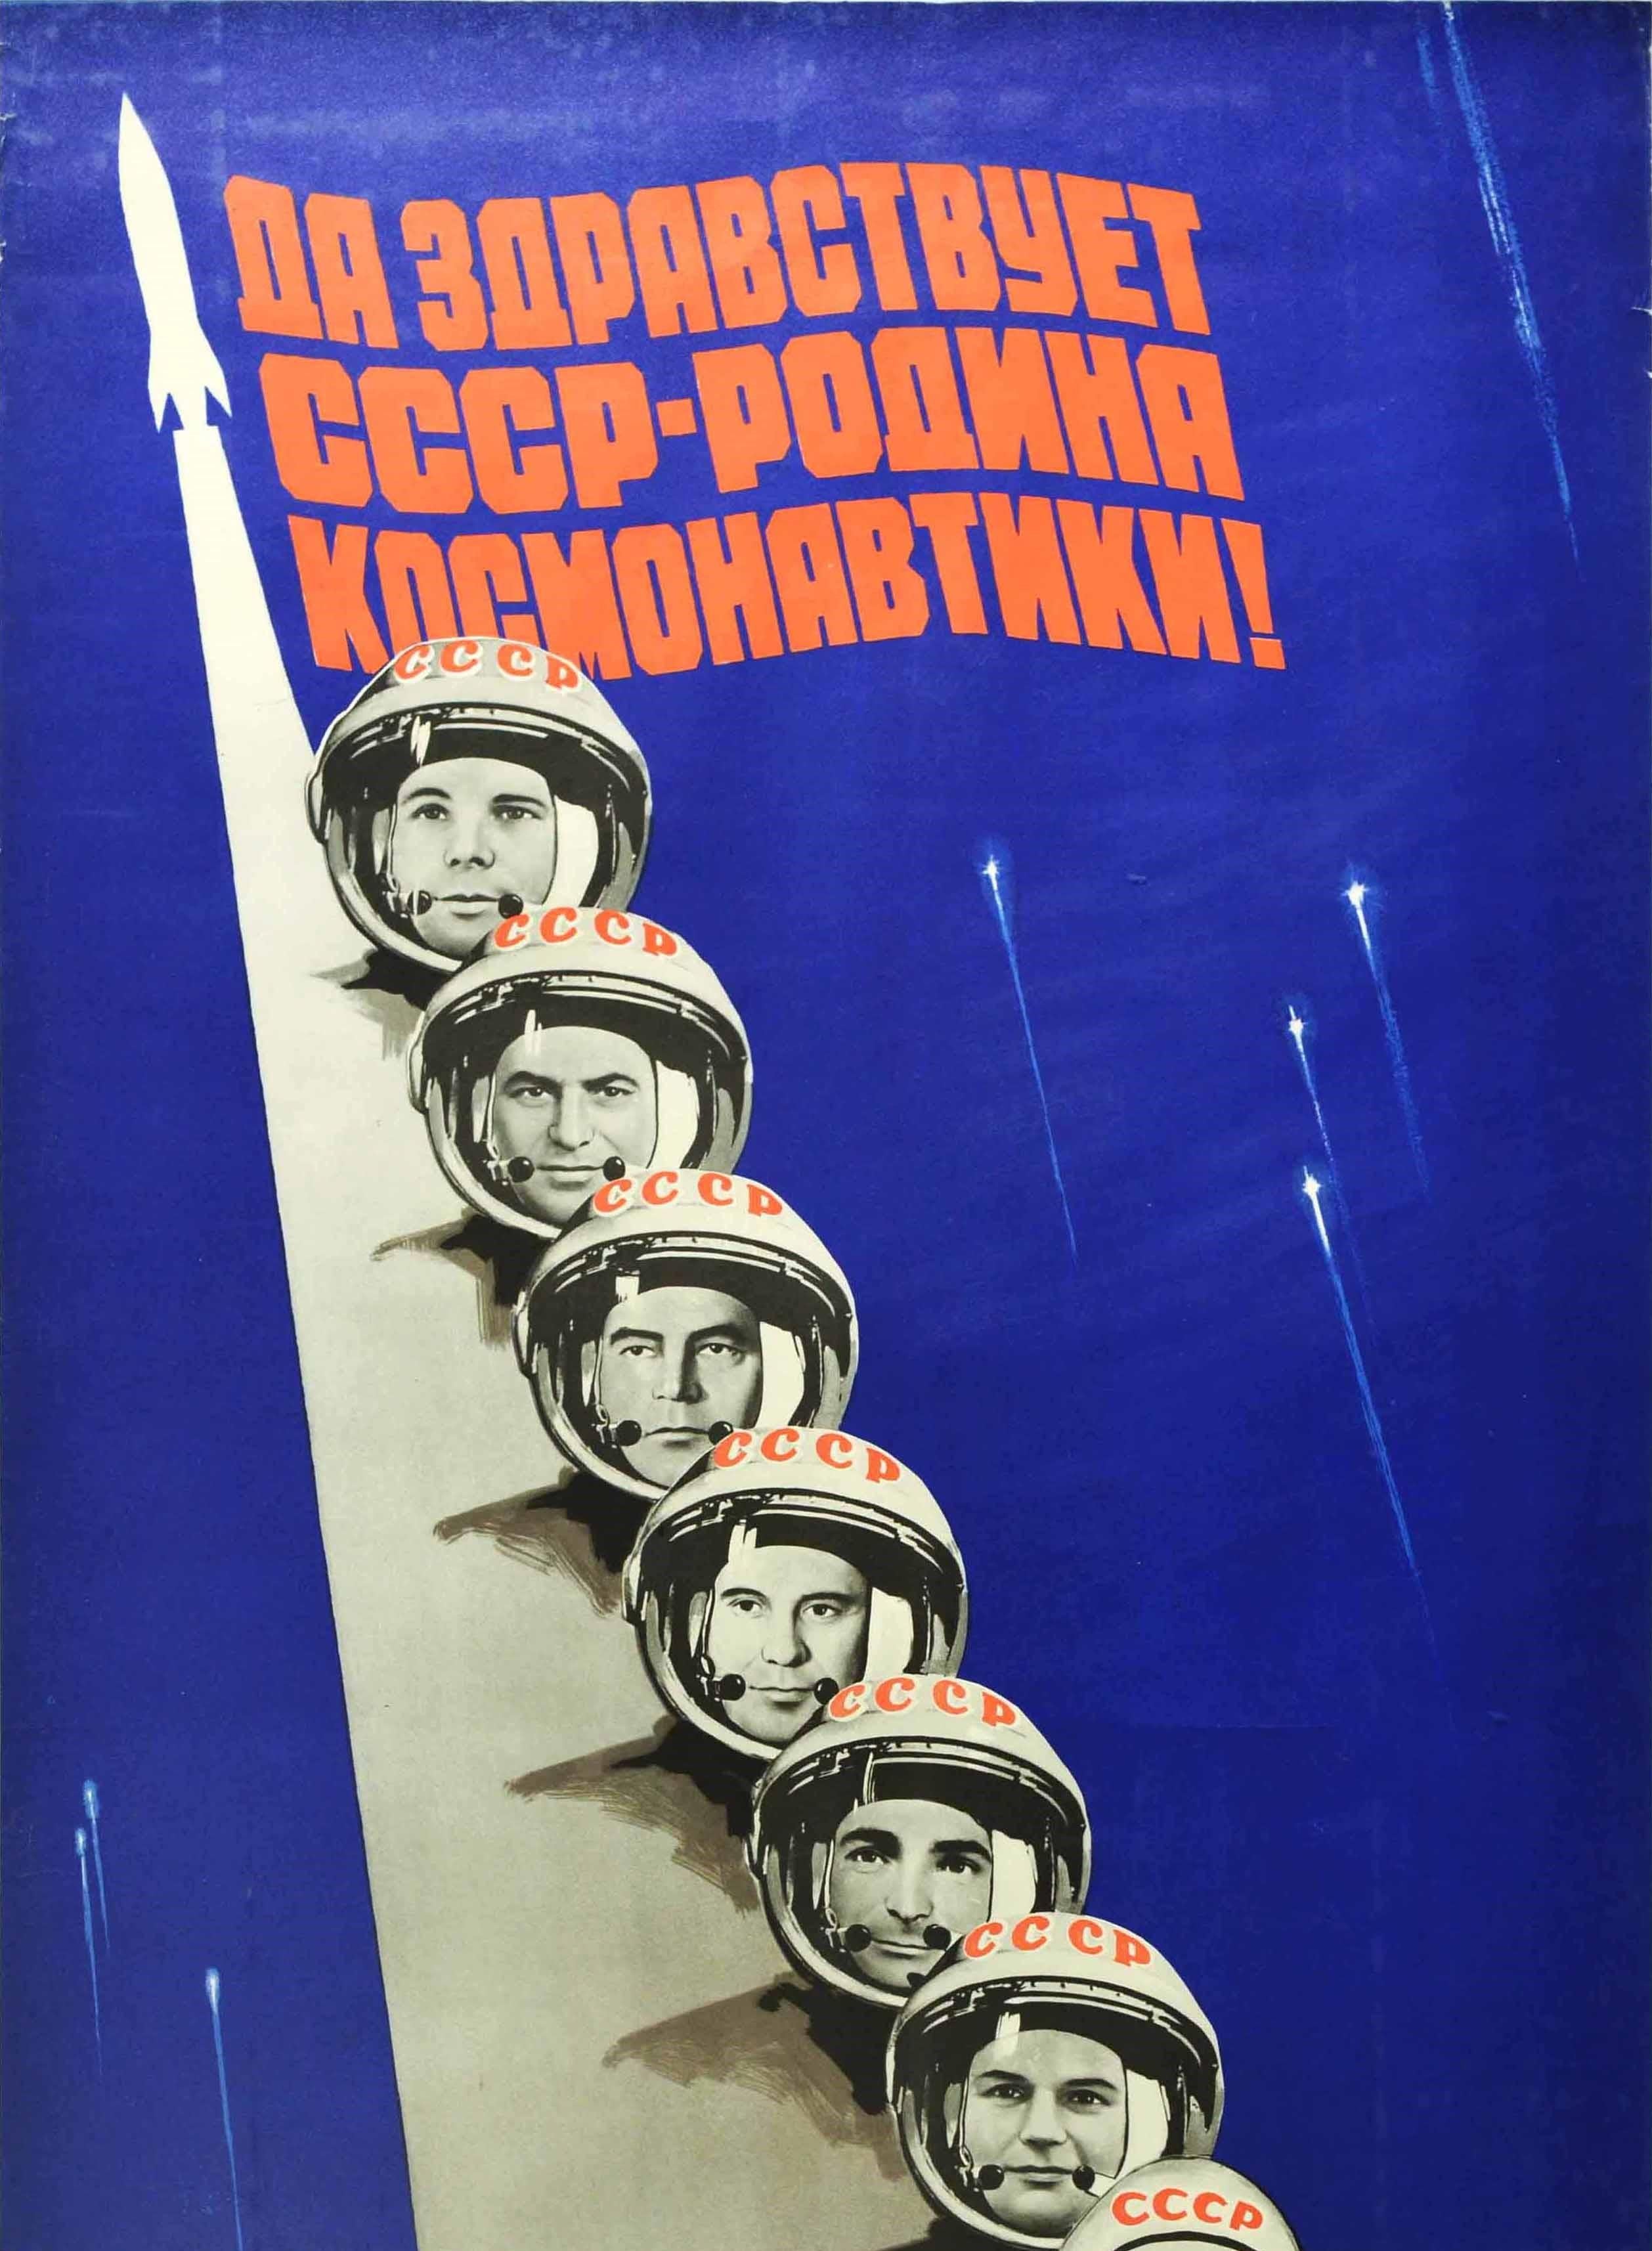 Original Vintage Poster Monument Space Exploration Science Cosmonautics Homeland - Print by Y Kershin V Truhachev